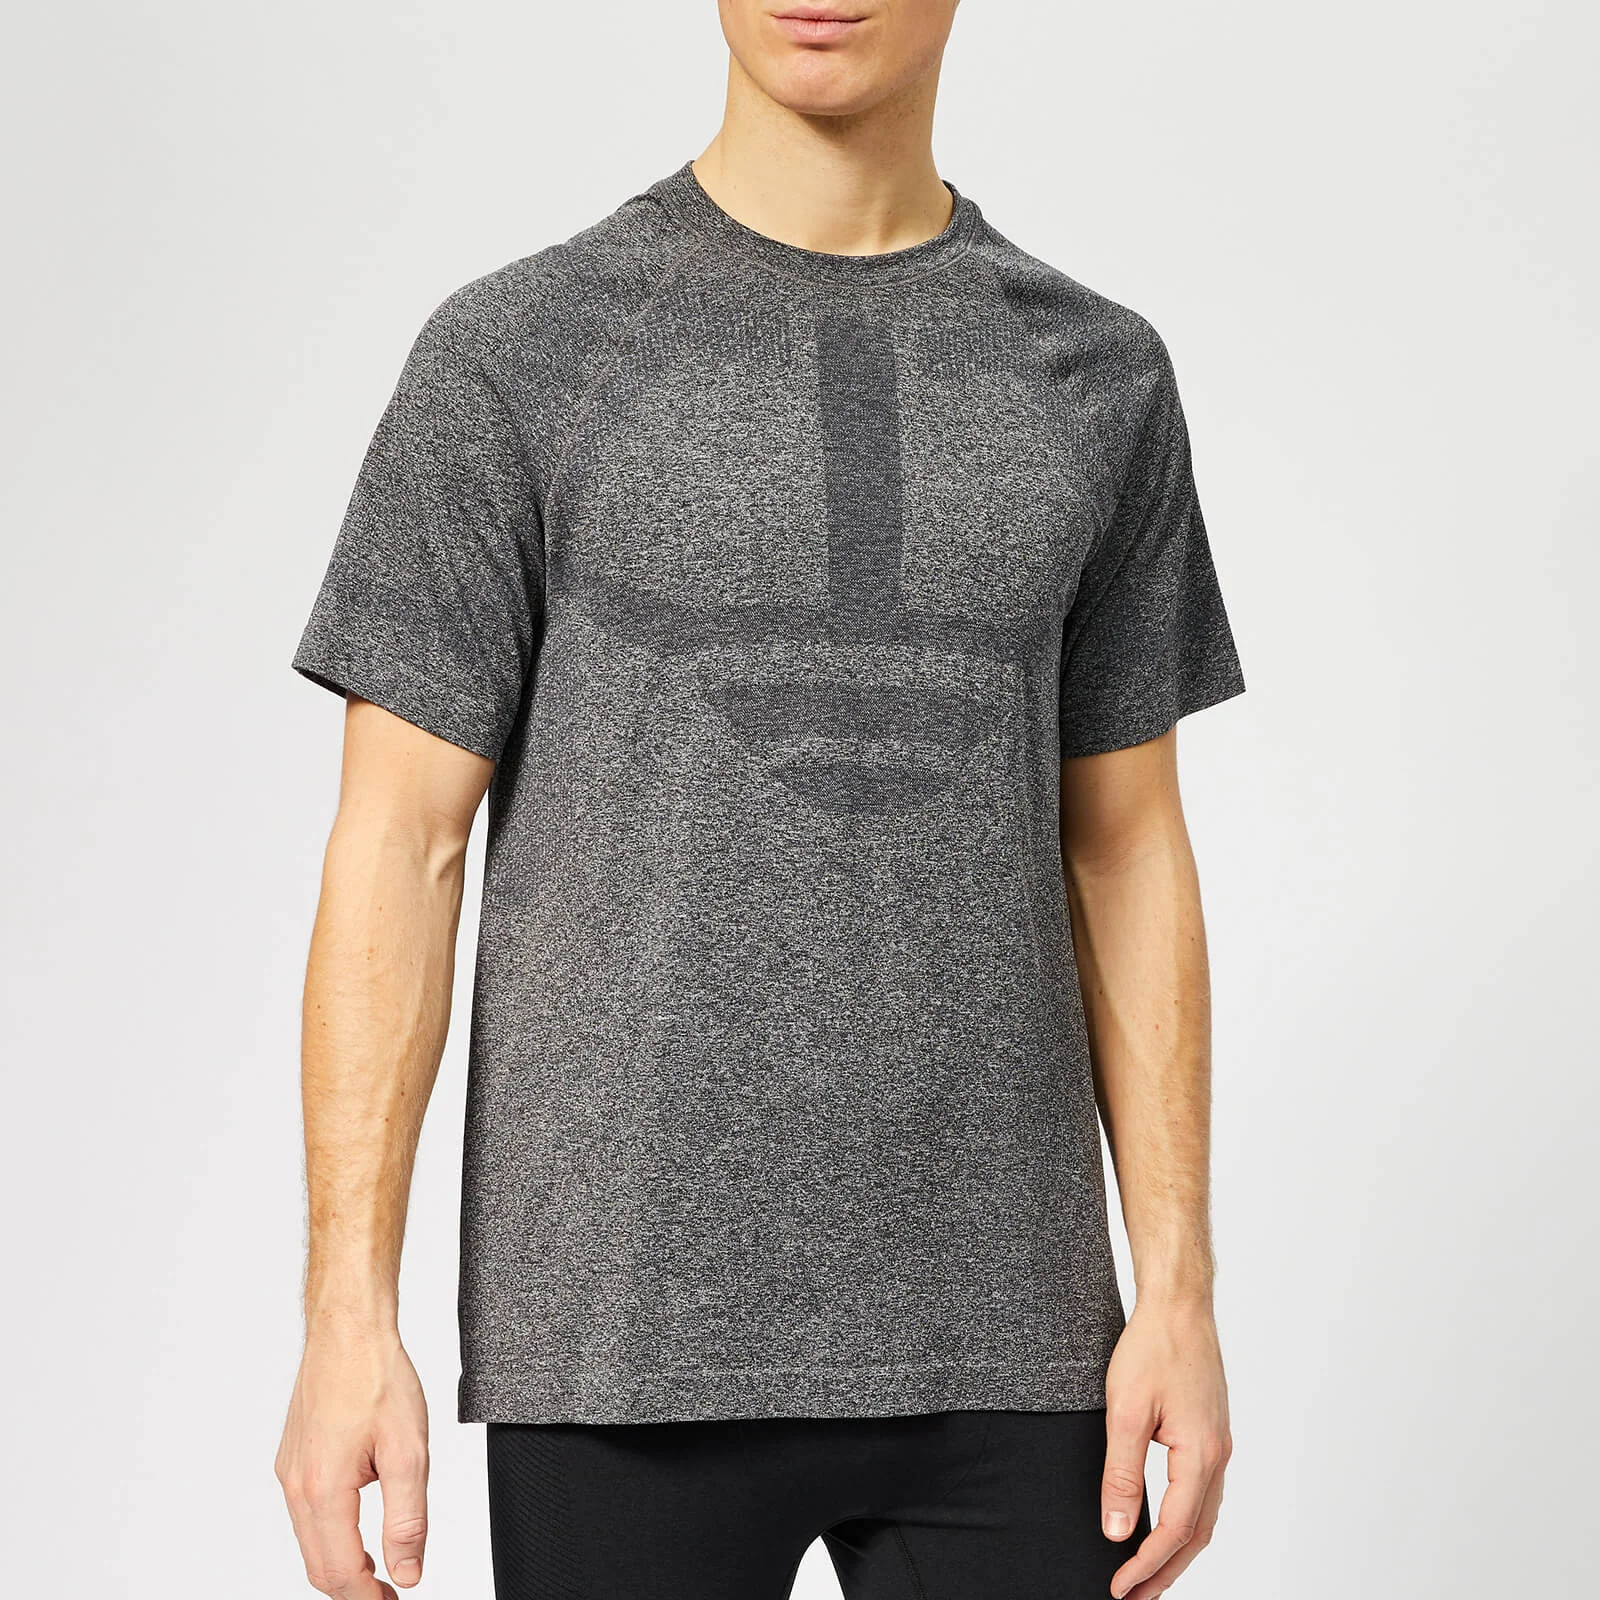 LNDR Men's Iron Short Sleeve T-Shirt - Charcoal Marl Image 1